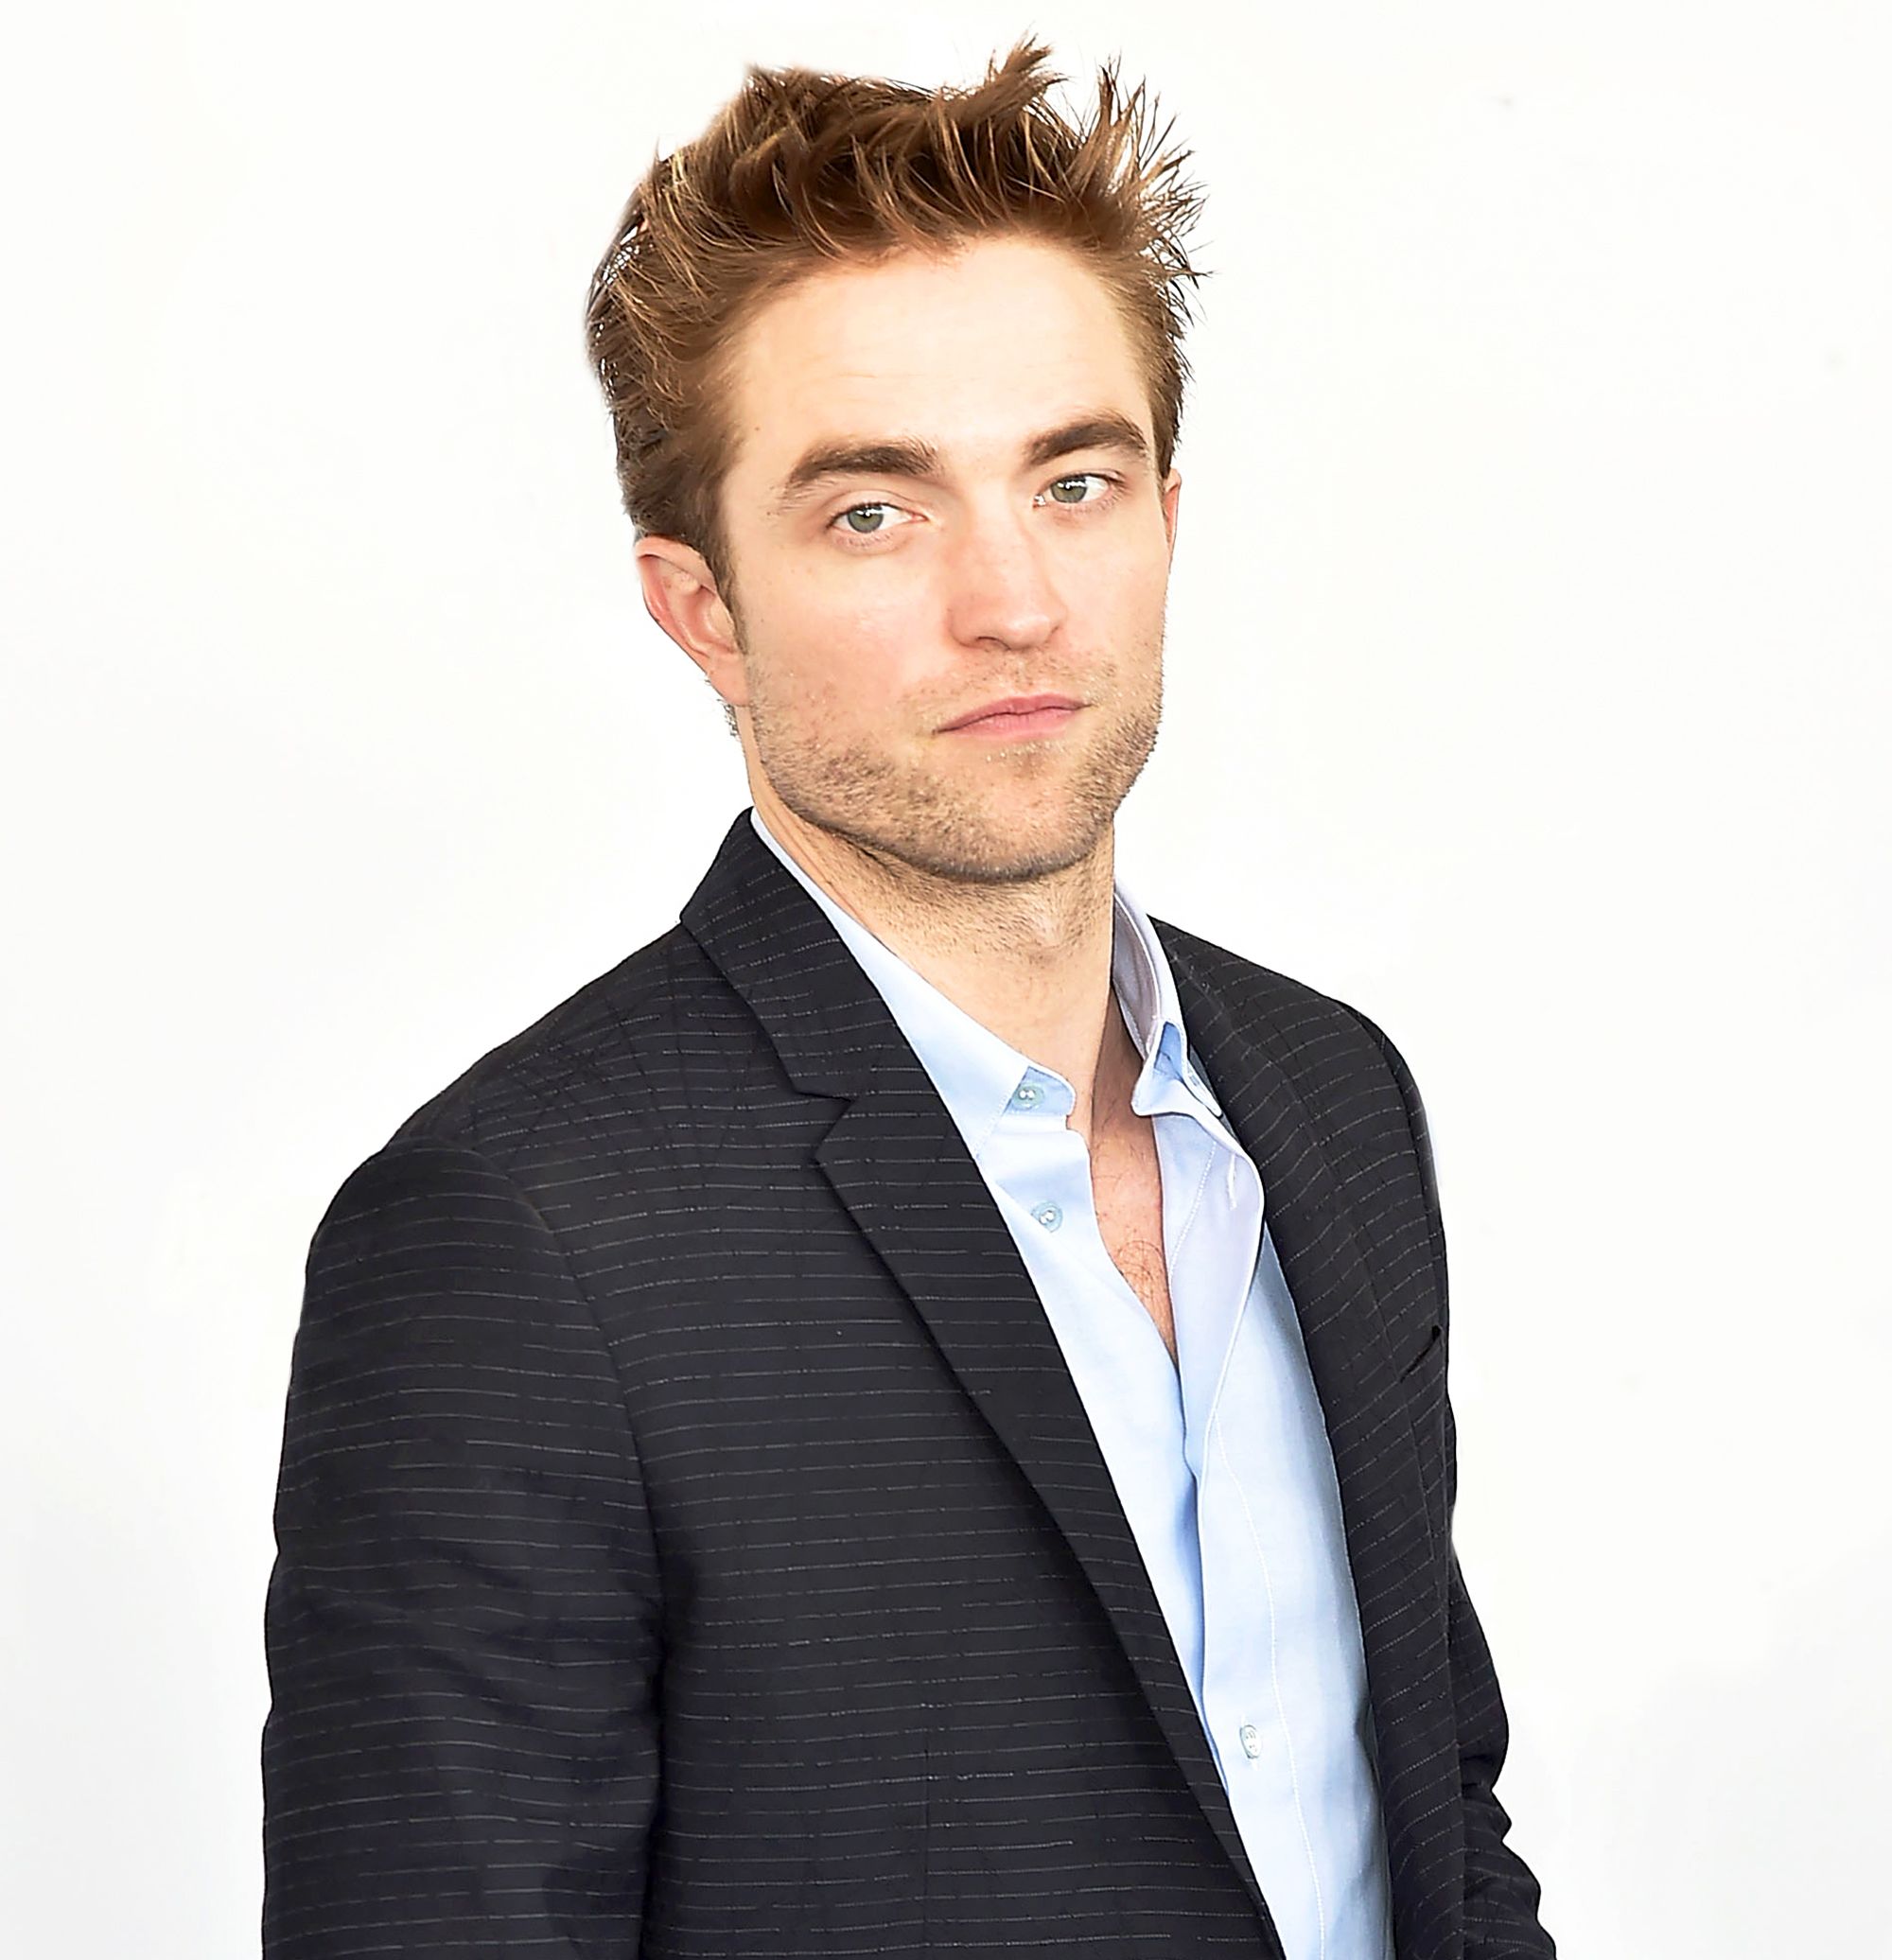 Robert Pattinson  - 2024 Light brown hair & exotic hair style.
